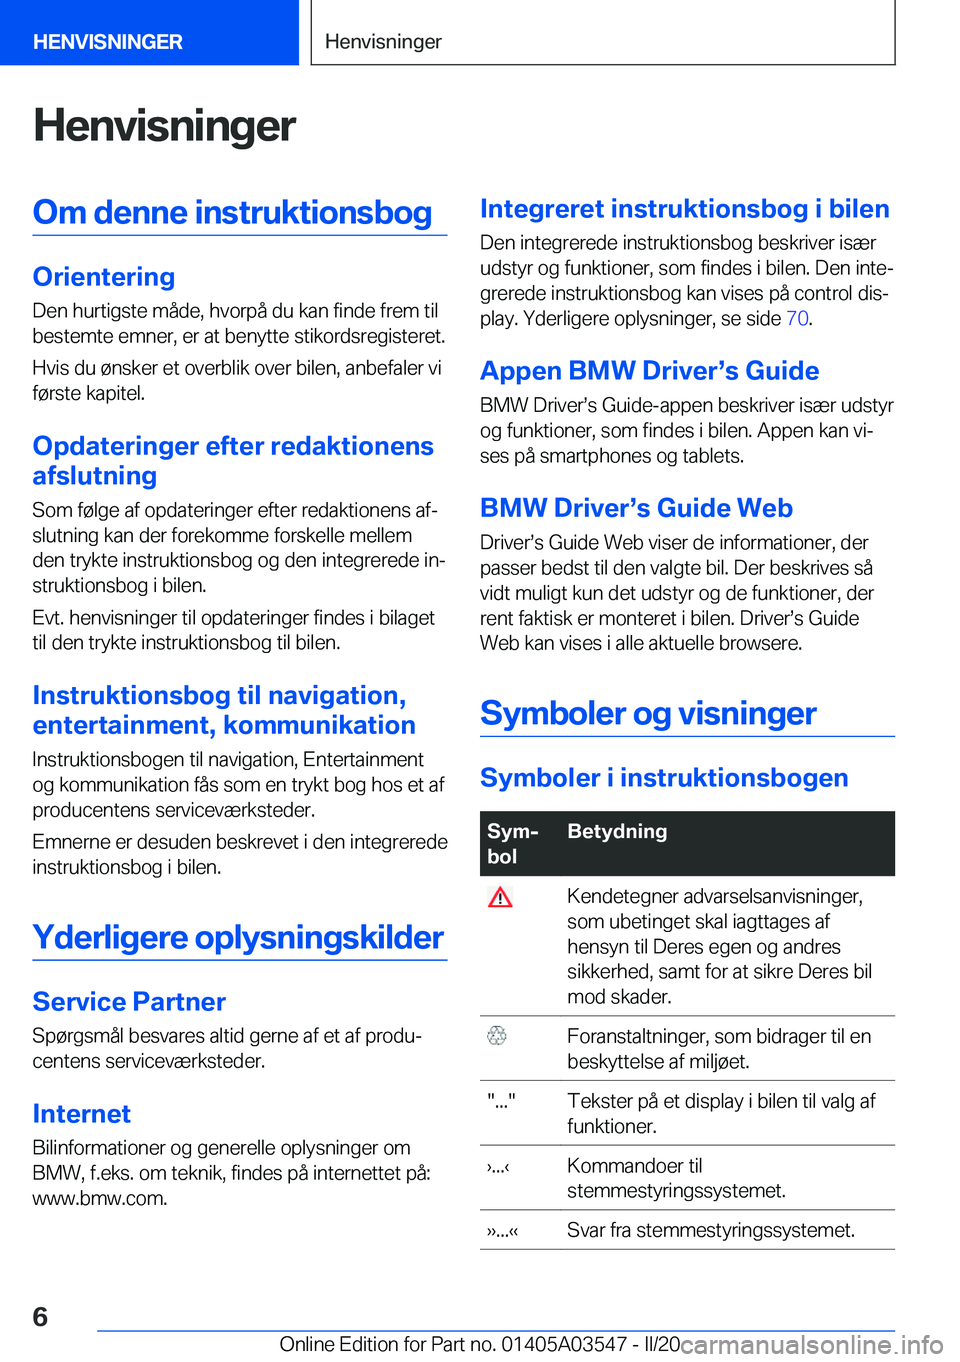 BMW X3 PLUG IN HYBRID 2020  InstruktionsbØger (in Danish) �H�e�n�v�i�s�n�i�n�g�e�r�O�m��d�e�n�n�e��i�n�s�t�r�u�k�t�i�o�n�s�b�o�g
�O�r�i�e�n�t�e�r�i�n�g�D�e�n��h�u�r�t�i�g�s�t�e��m�å�d�e�,��h�v�o�r�p�å��d�u��k�a�n��f�i�n�d�e��f�r�e�m��t�i�l
�b�e�s